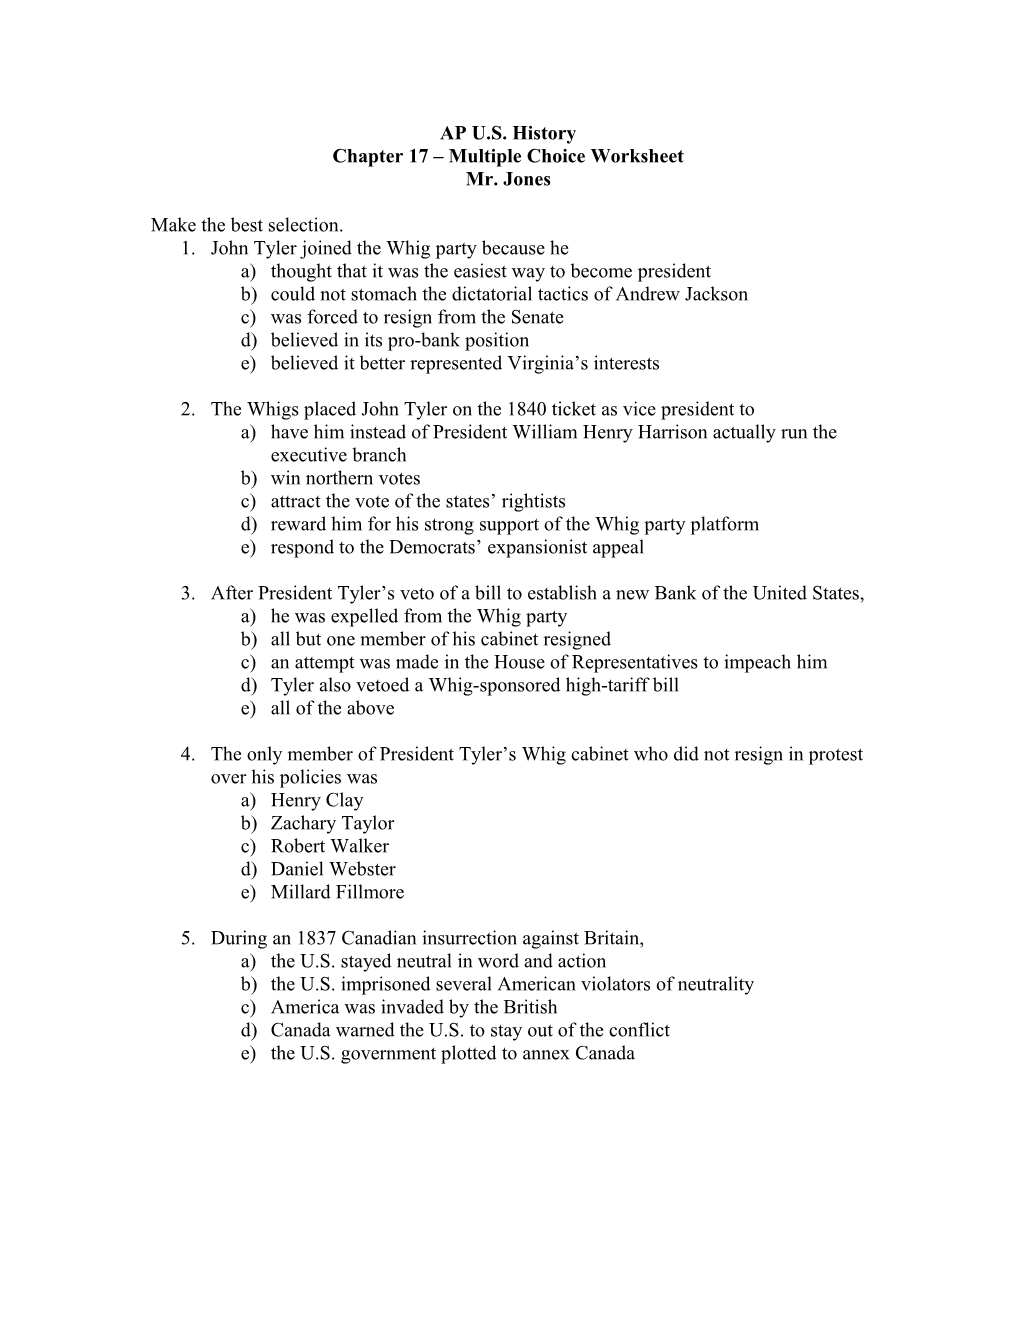 Chapter 17 Multiple Choice Worksheet